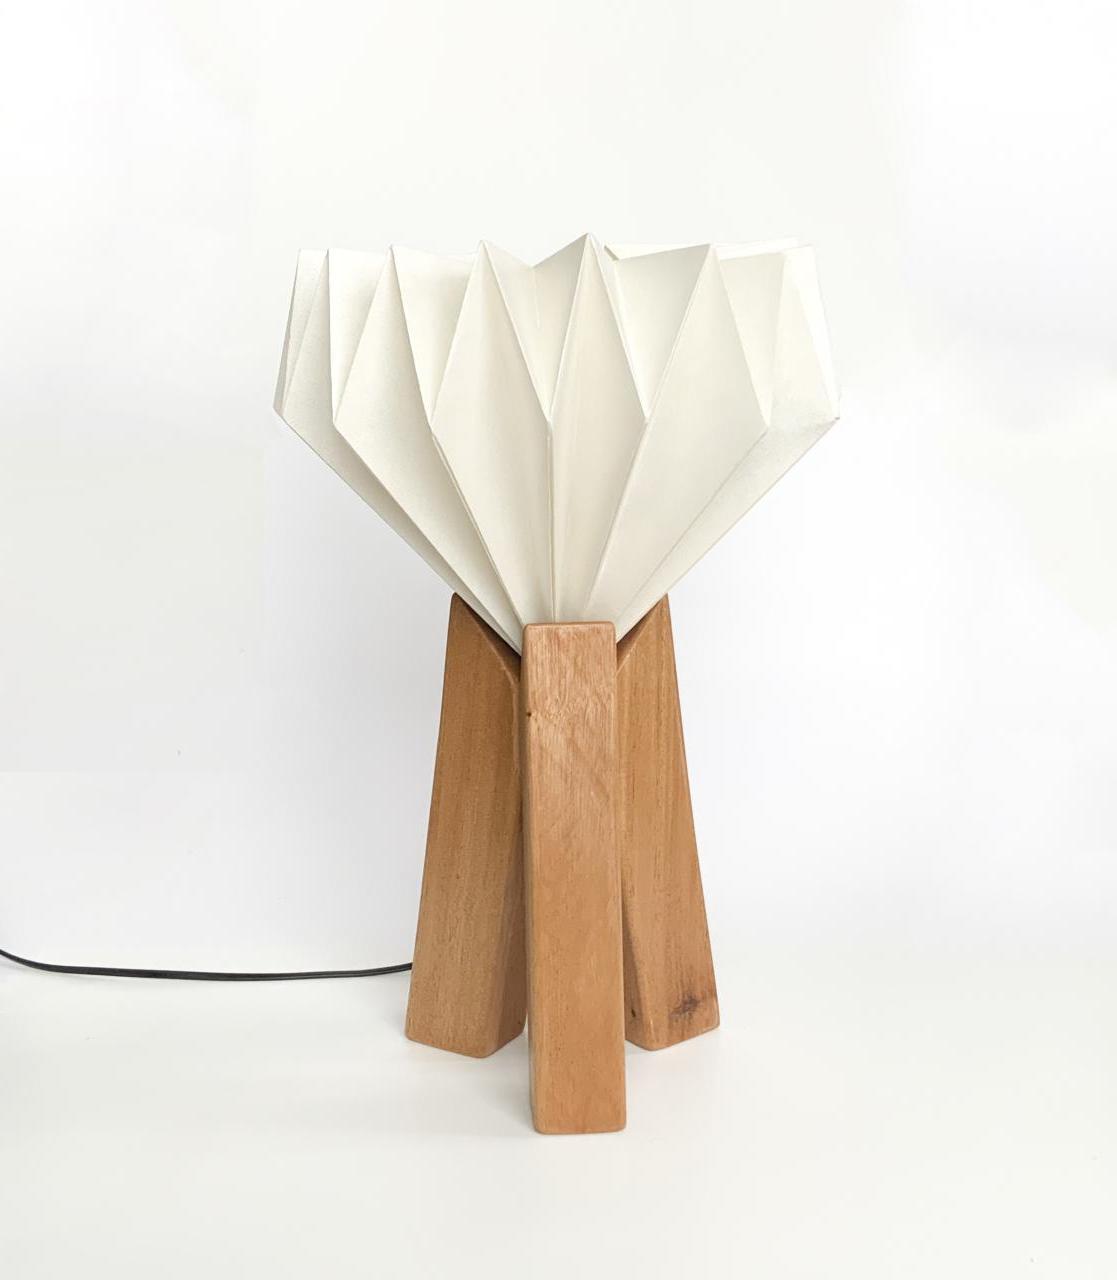 Innovative lamp design focusing on three wooden pillars.